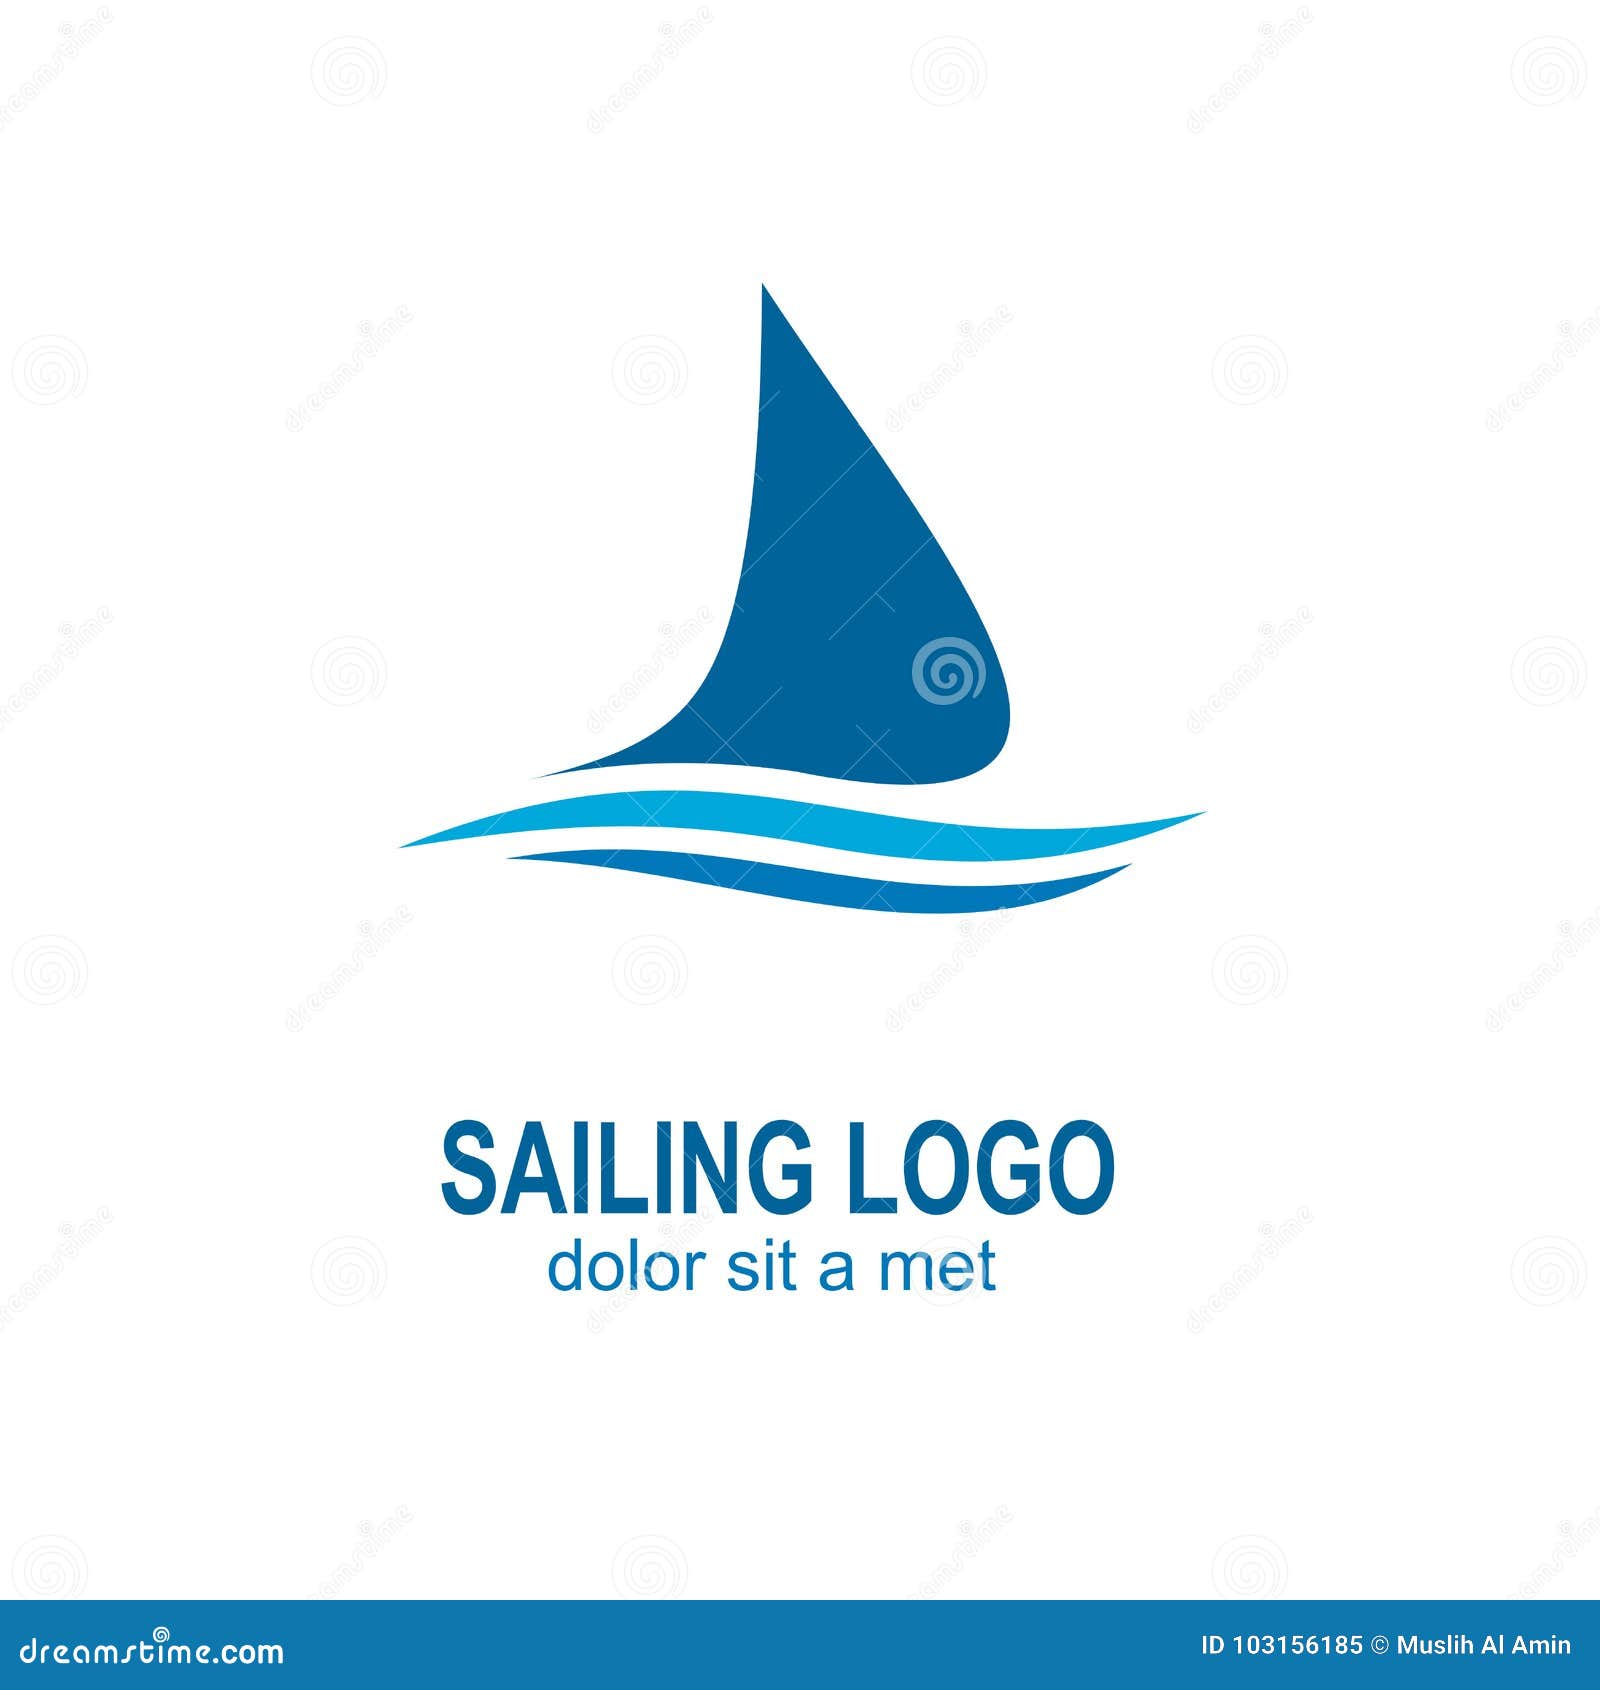 Sailing Logo Vector Illustration | CartoonDealer.com #17573646